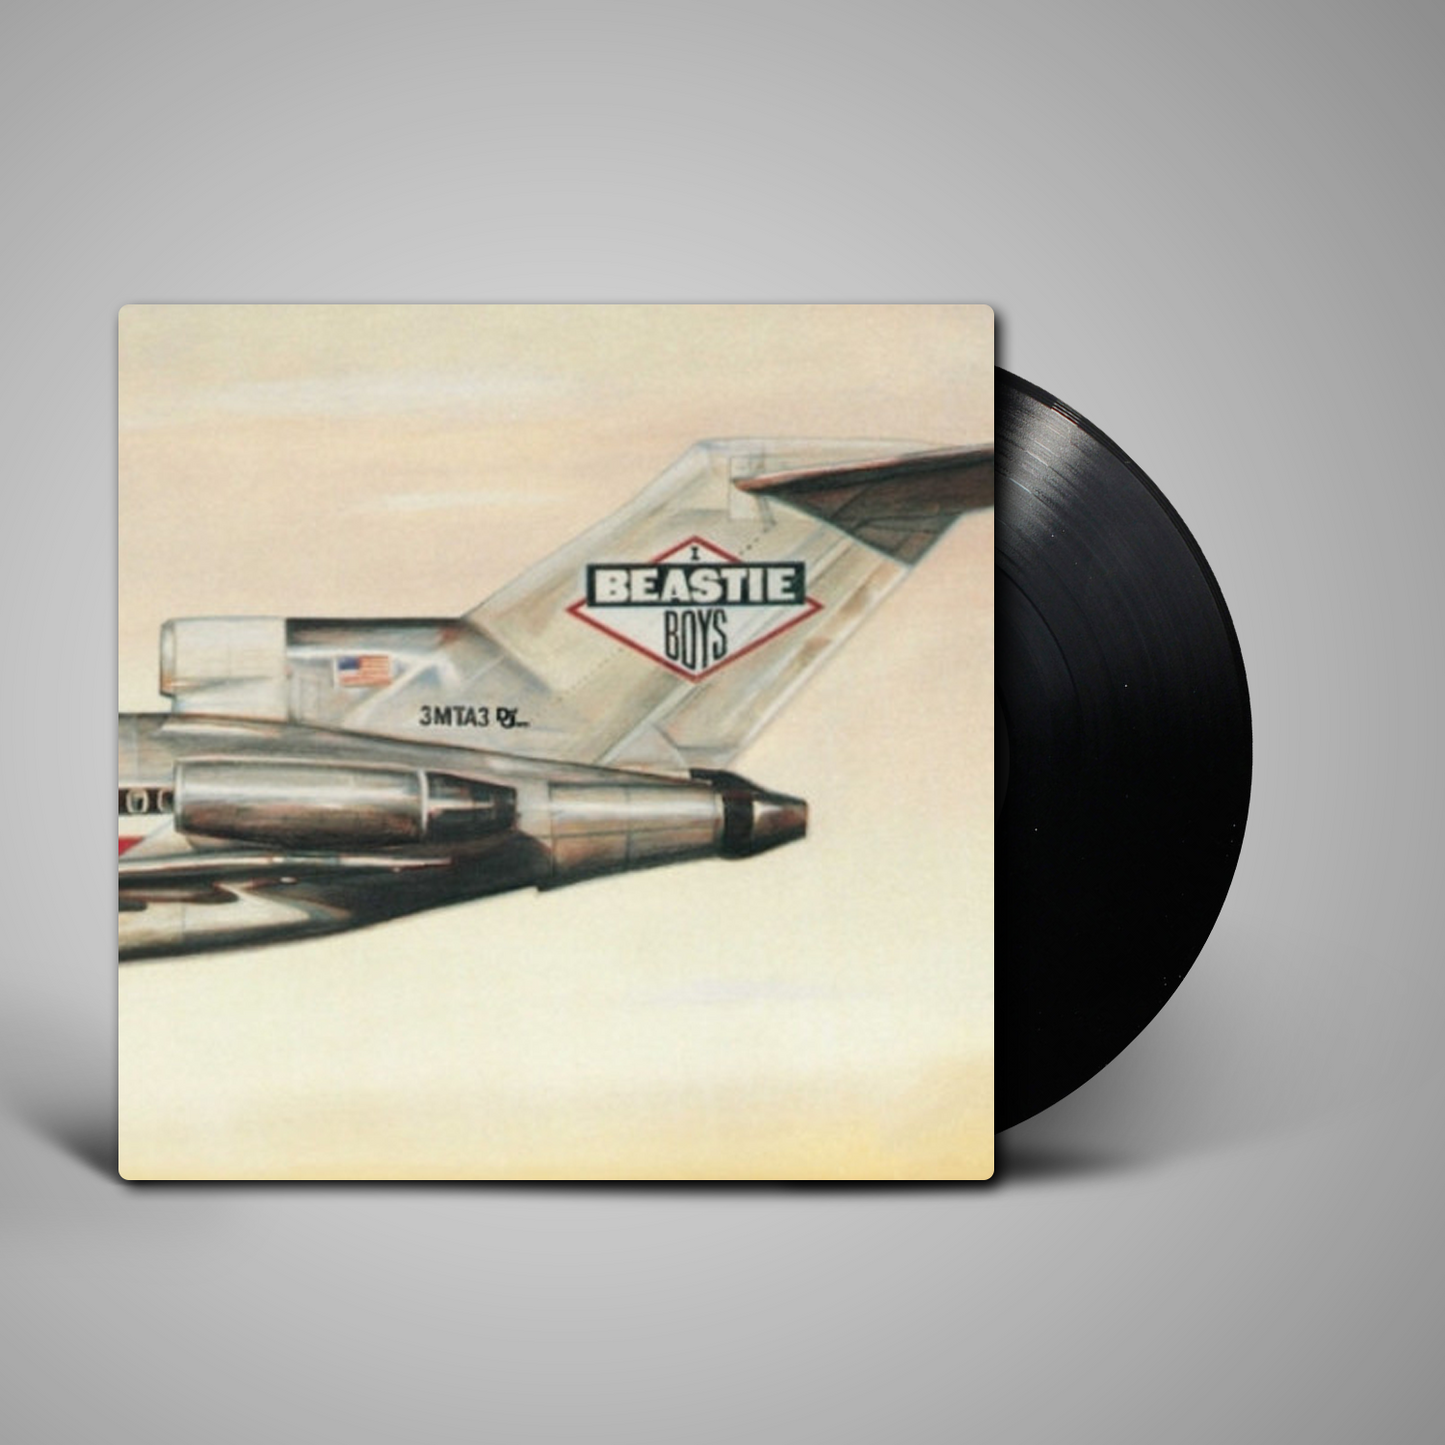 Beastie Boys - License To Ill (30th Anniversary Edition)